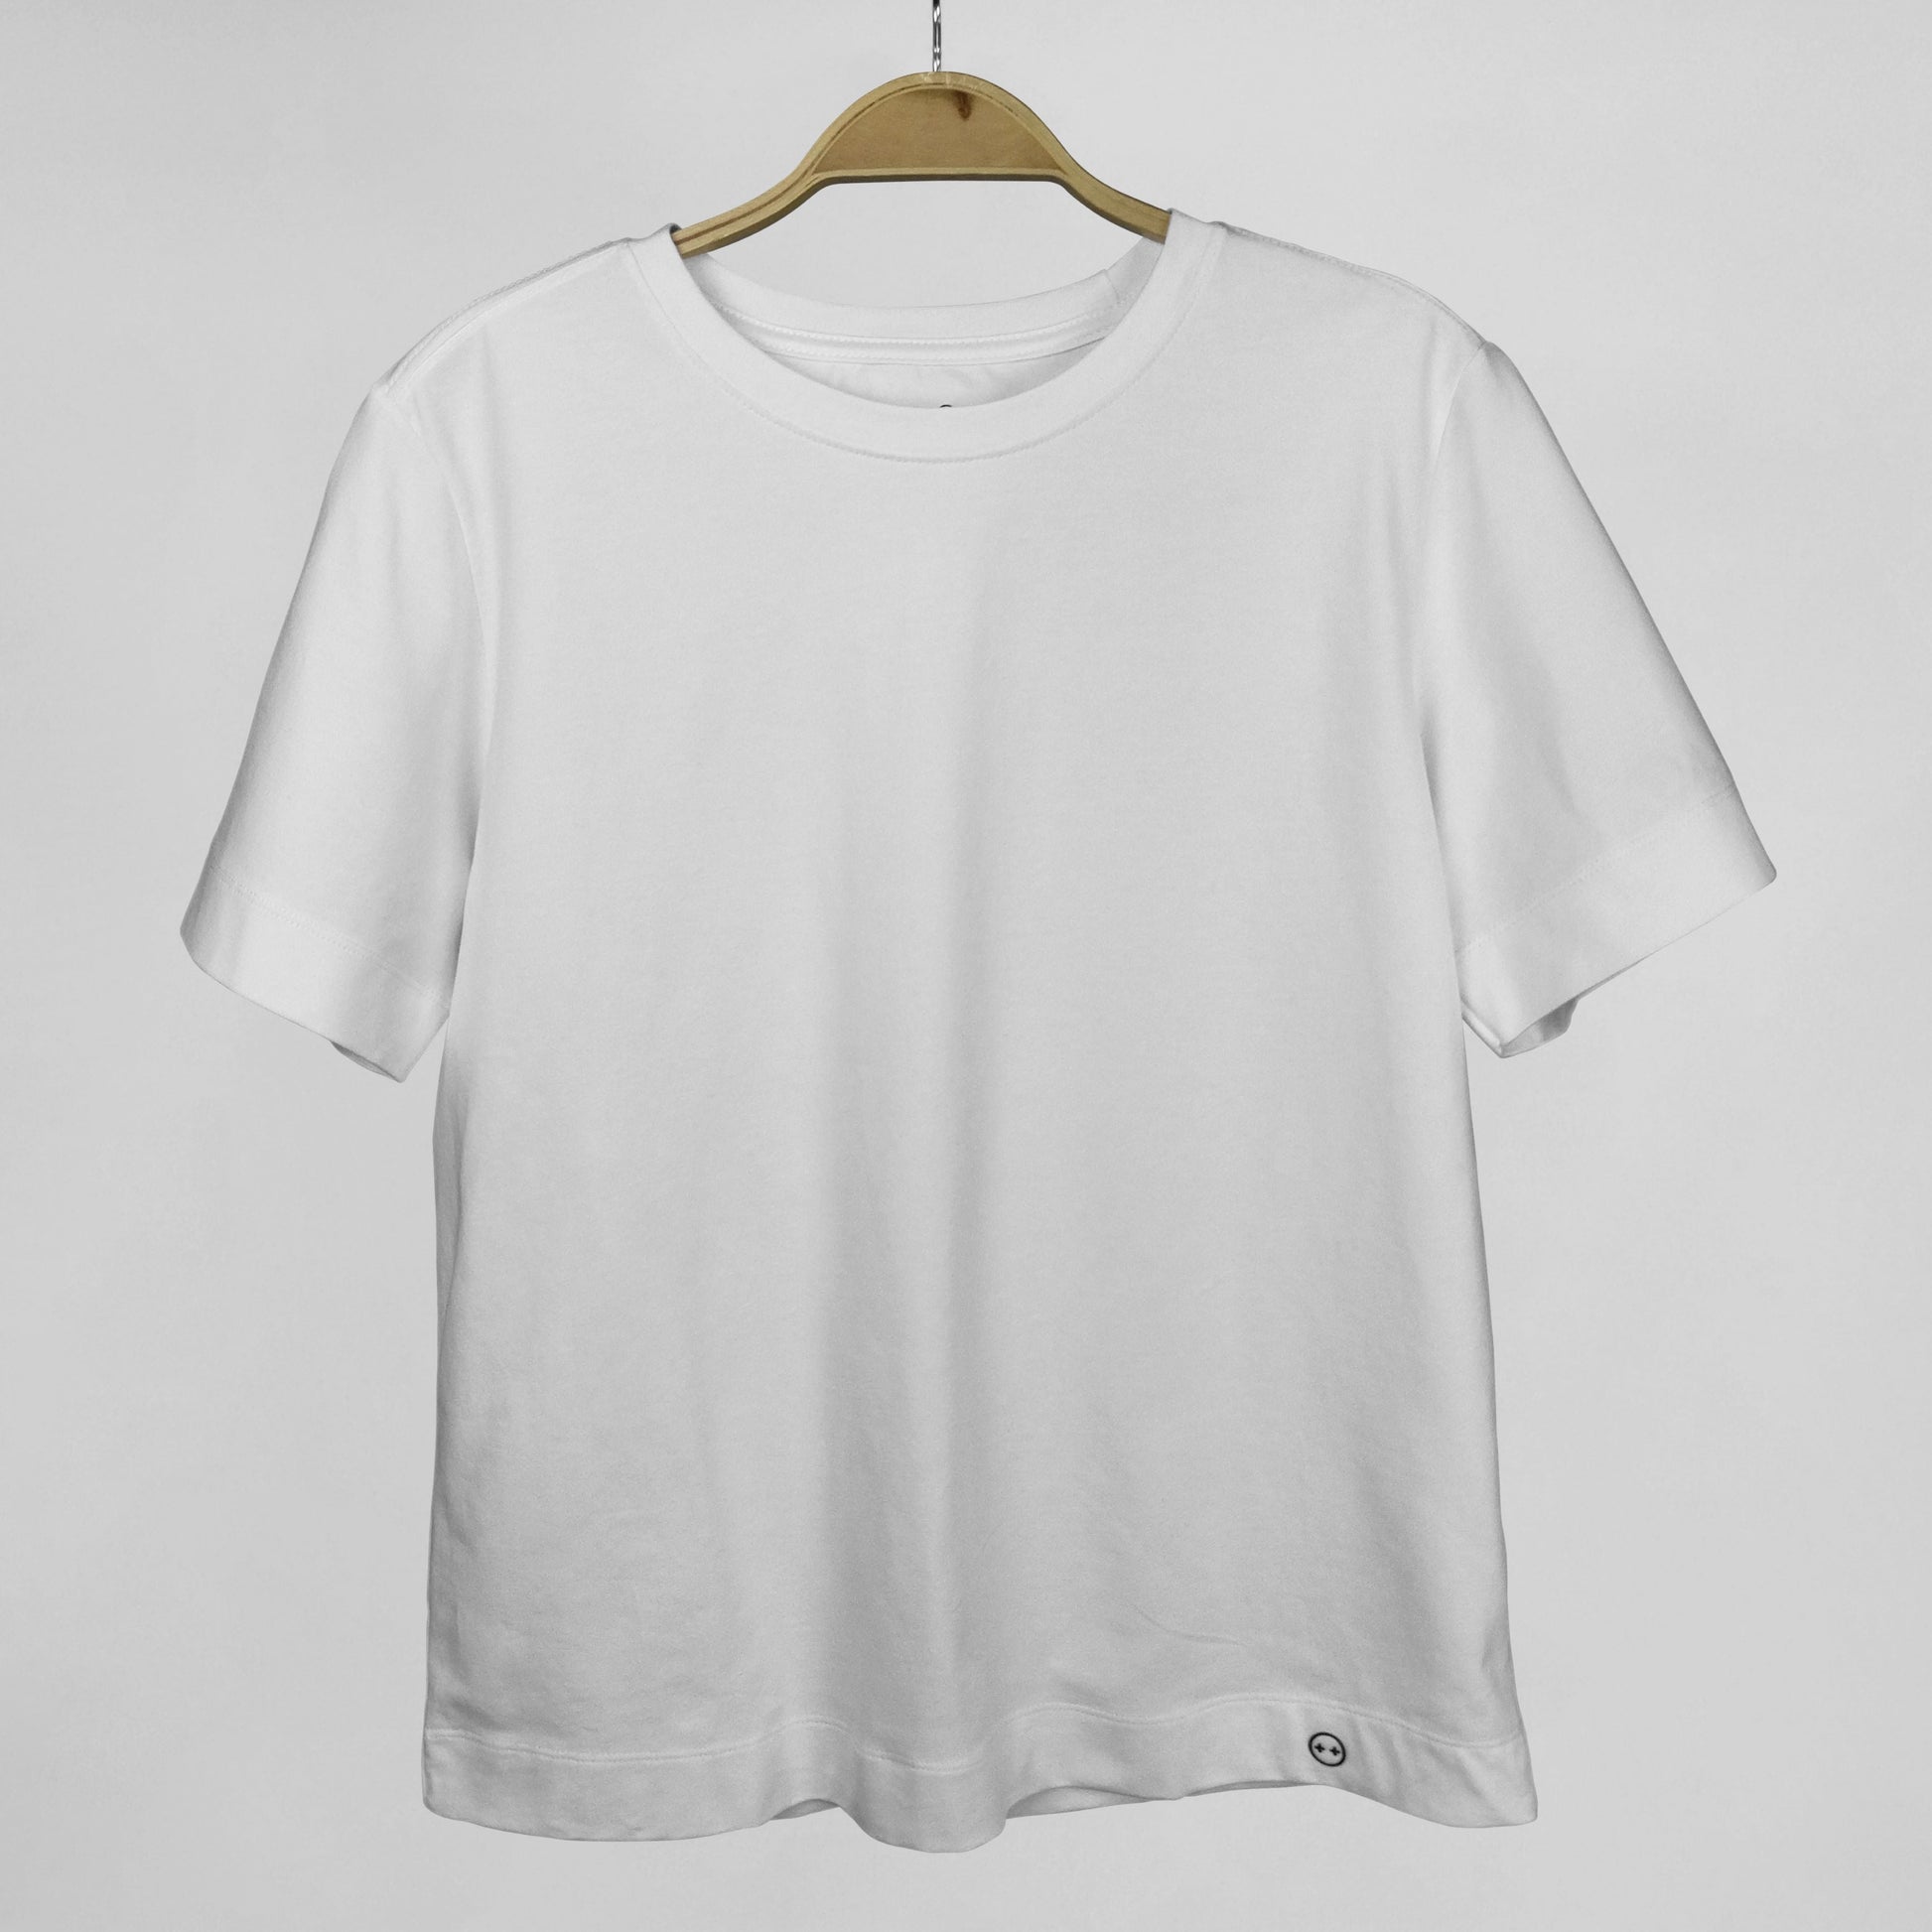 Camiseta manga corta cuello redondo color blanco